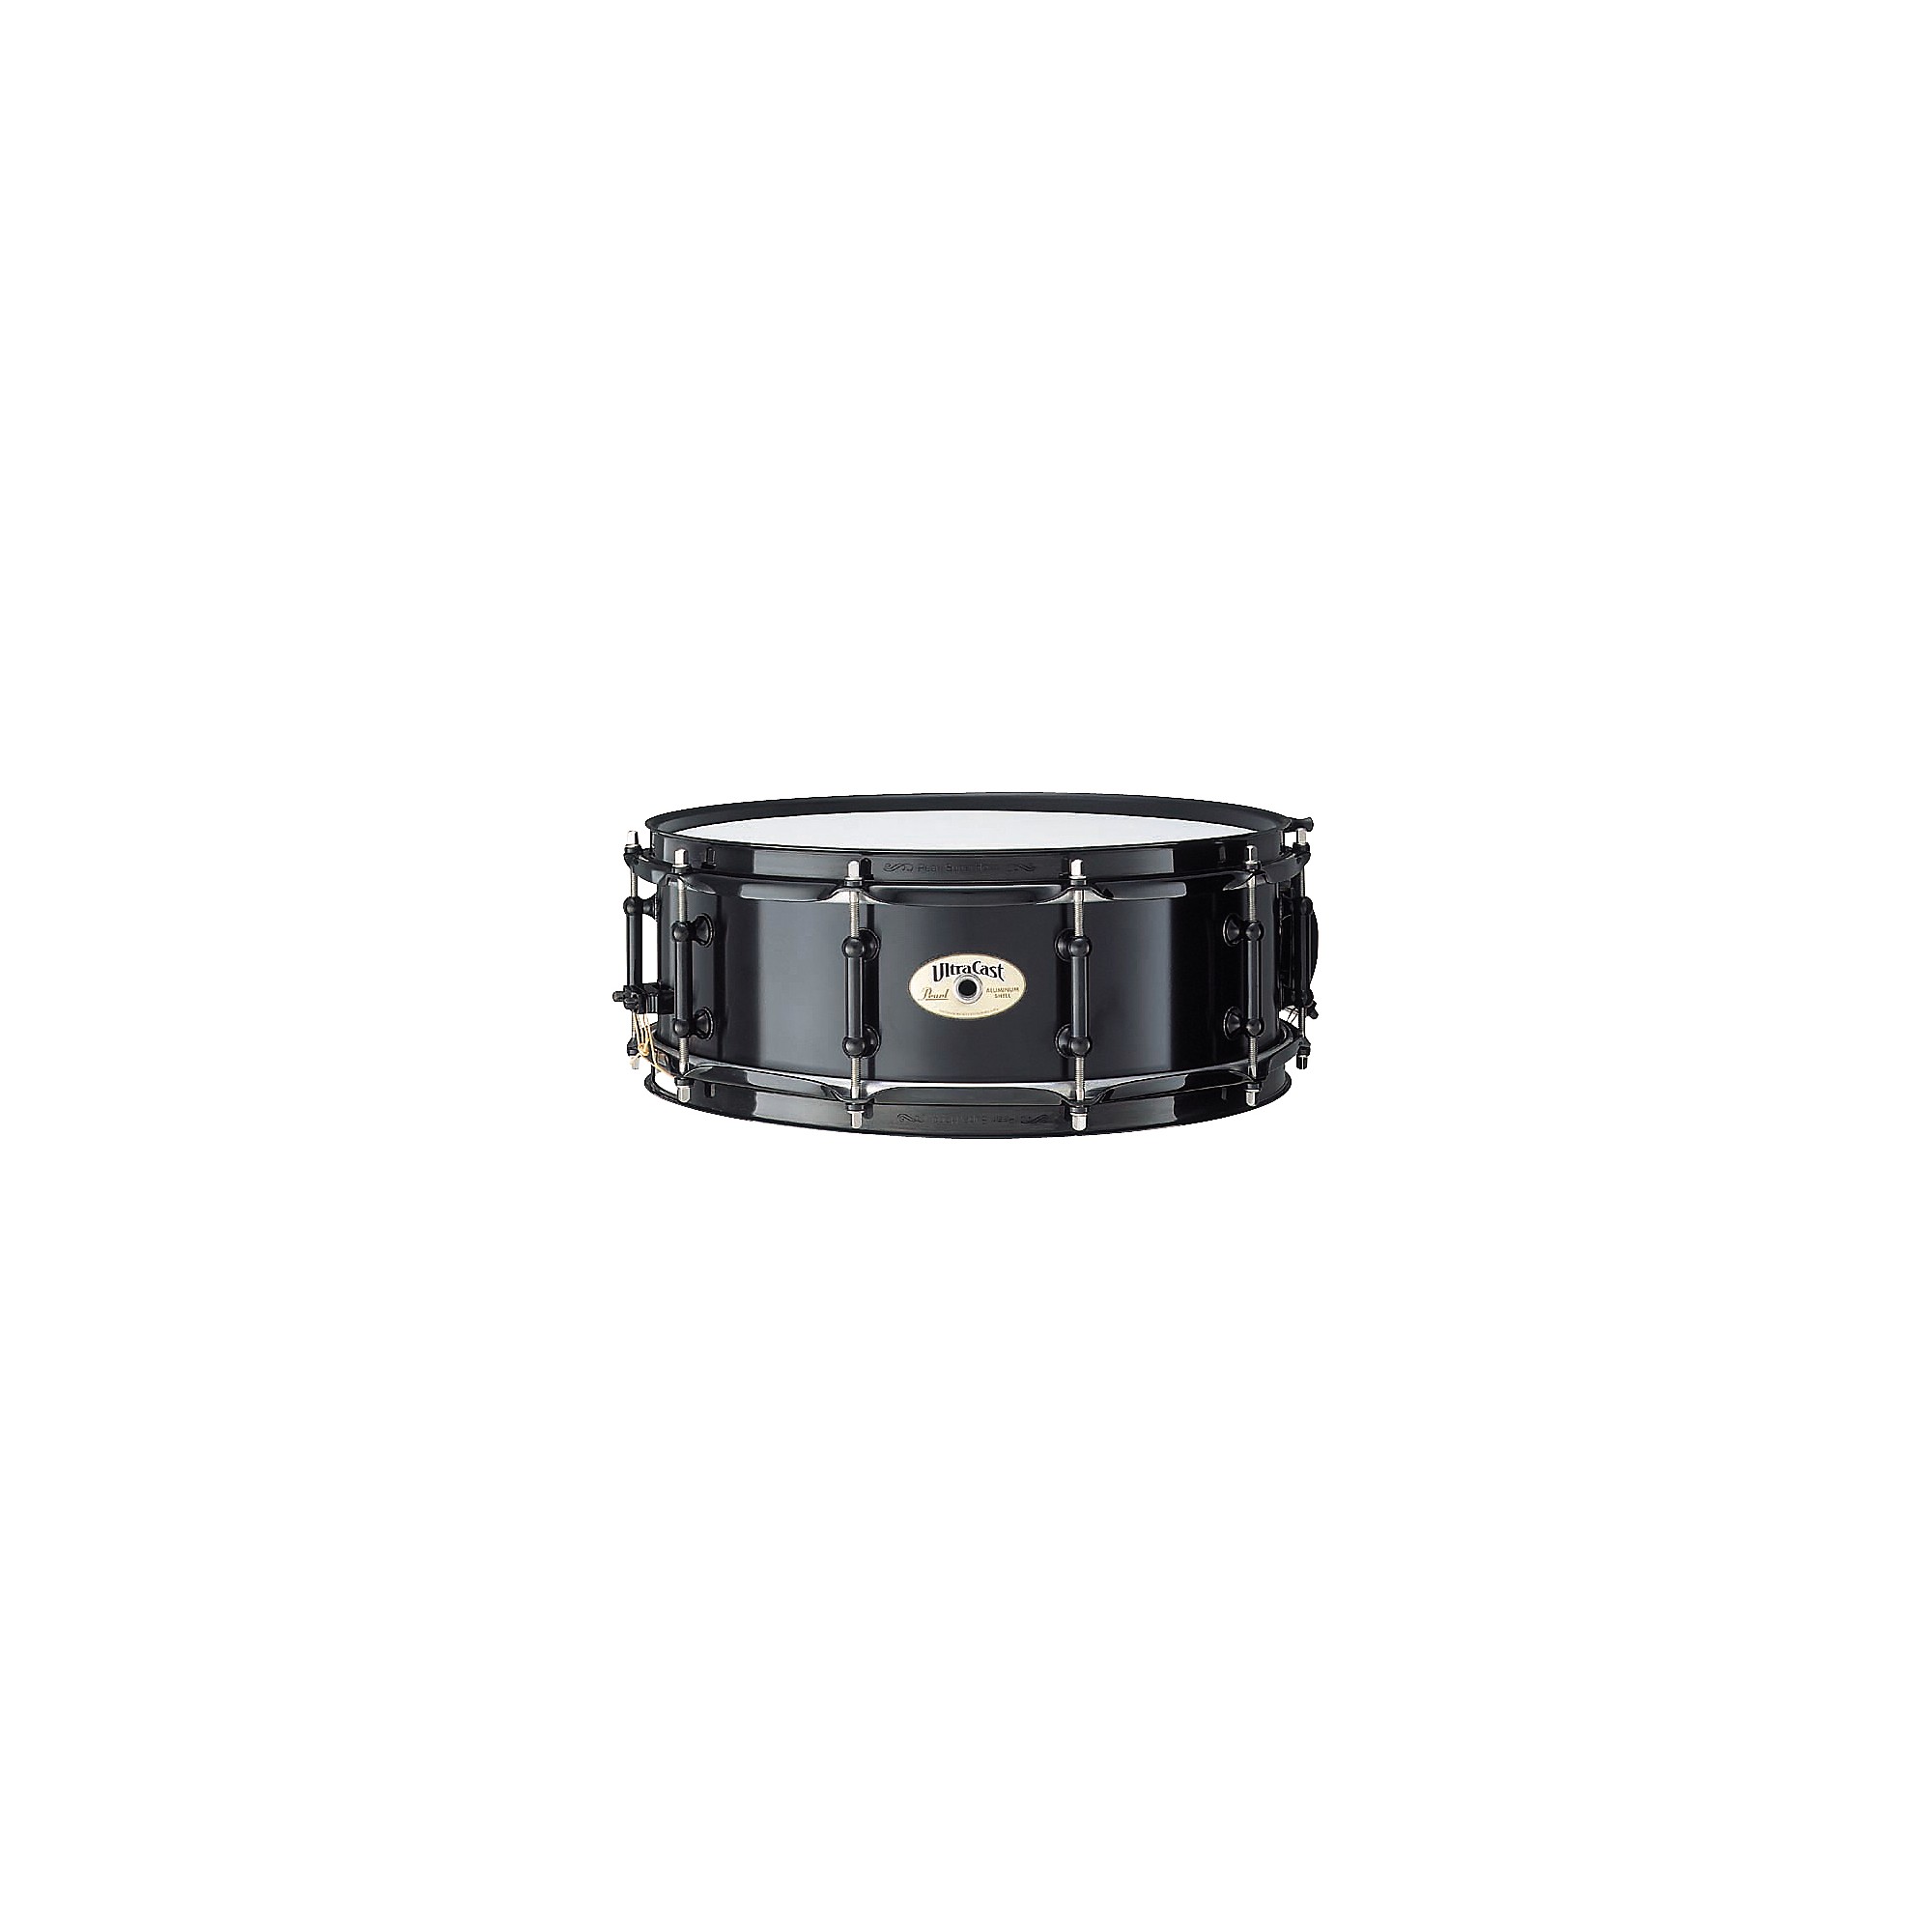 Pearl Ultracast Cast Aluminum Snare Drum Black 14 x 6.5 in